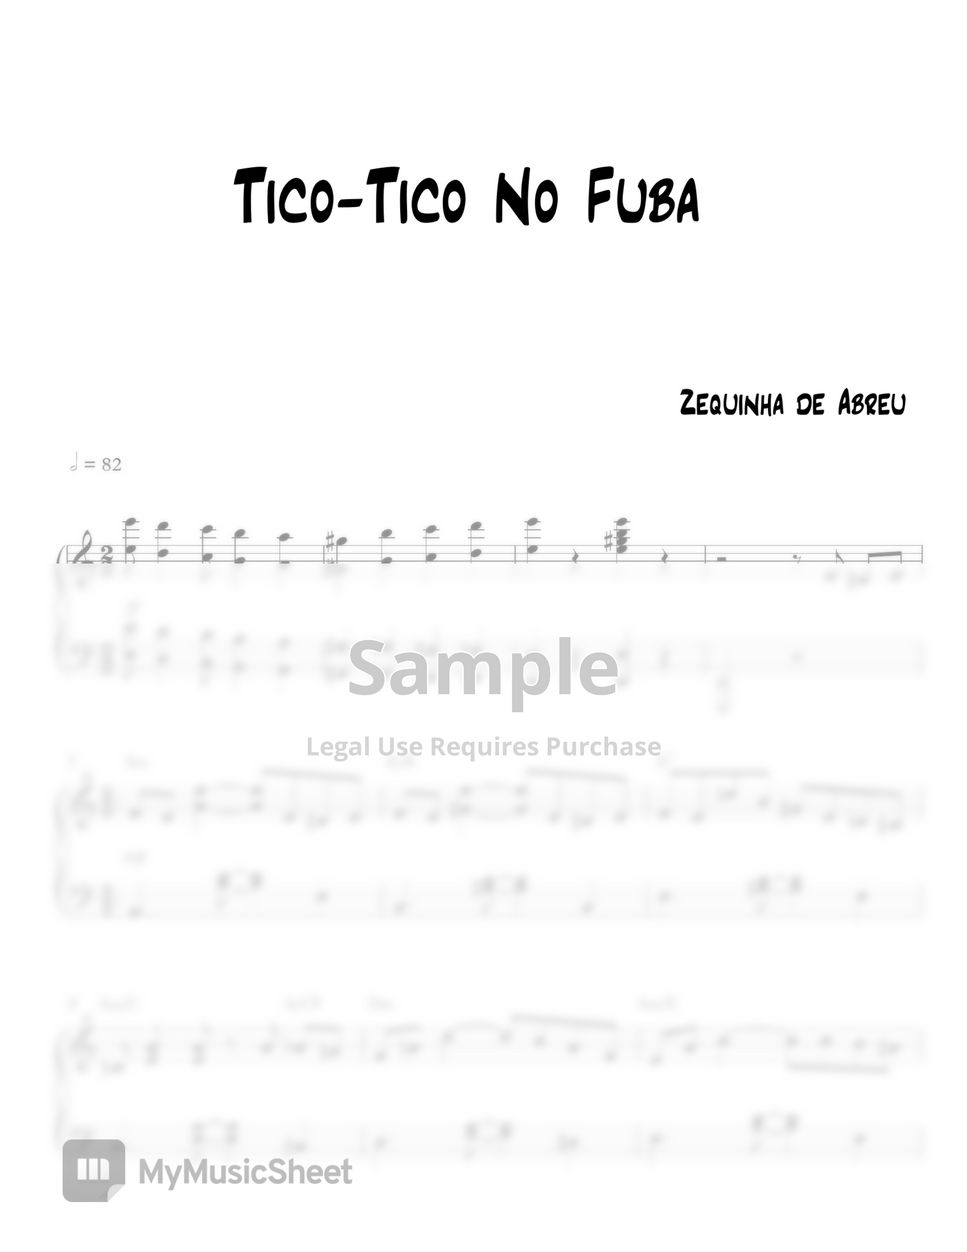 Zequinha de Abreu - Tico Tico No Fuba by MIWHA